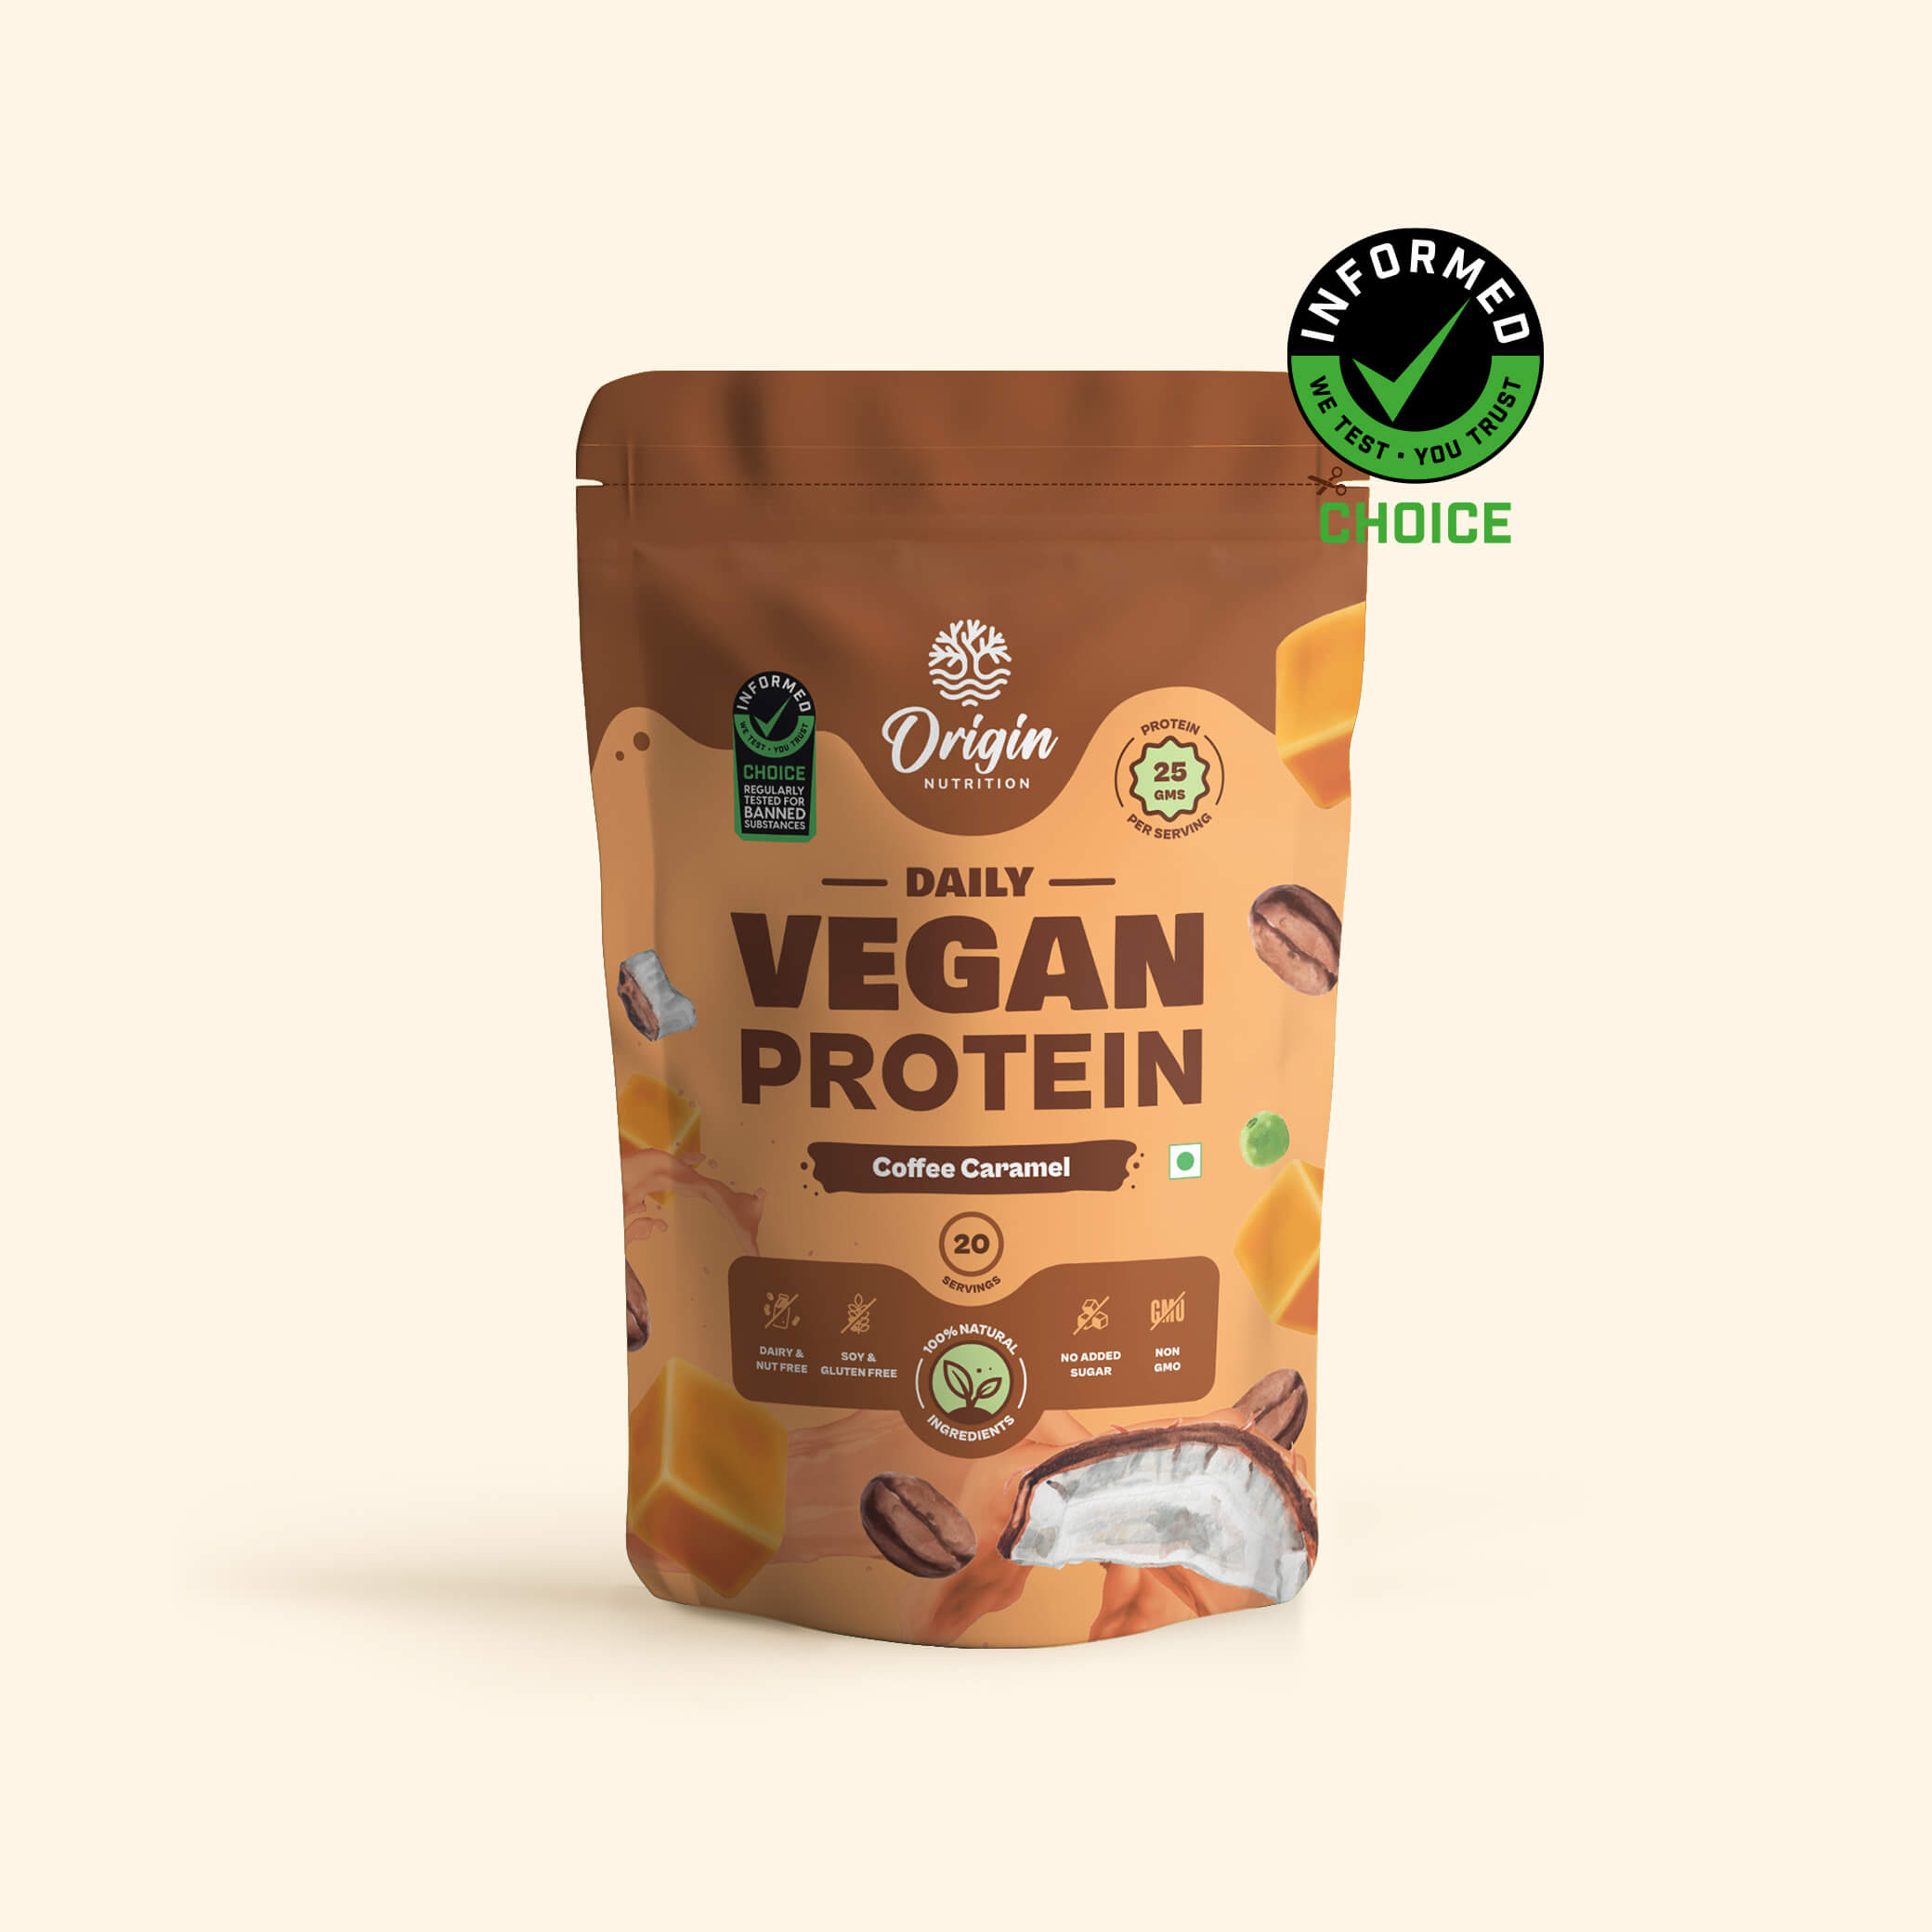 indsats amerikansk dollar Diverse Daily Vegan Plant Protein Powder - Coffee Caramel - Origin Nutrition